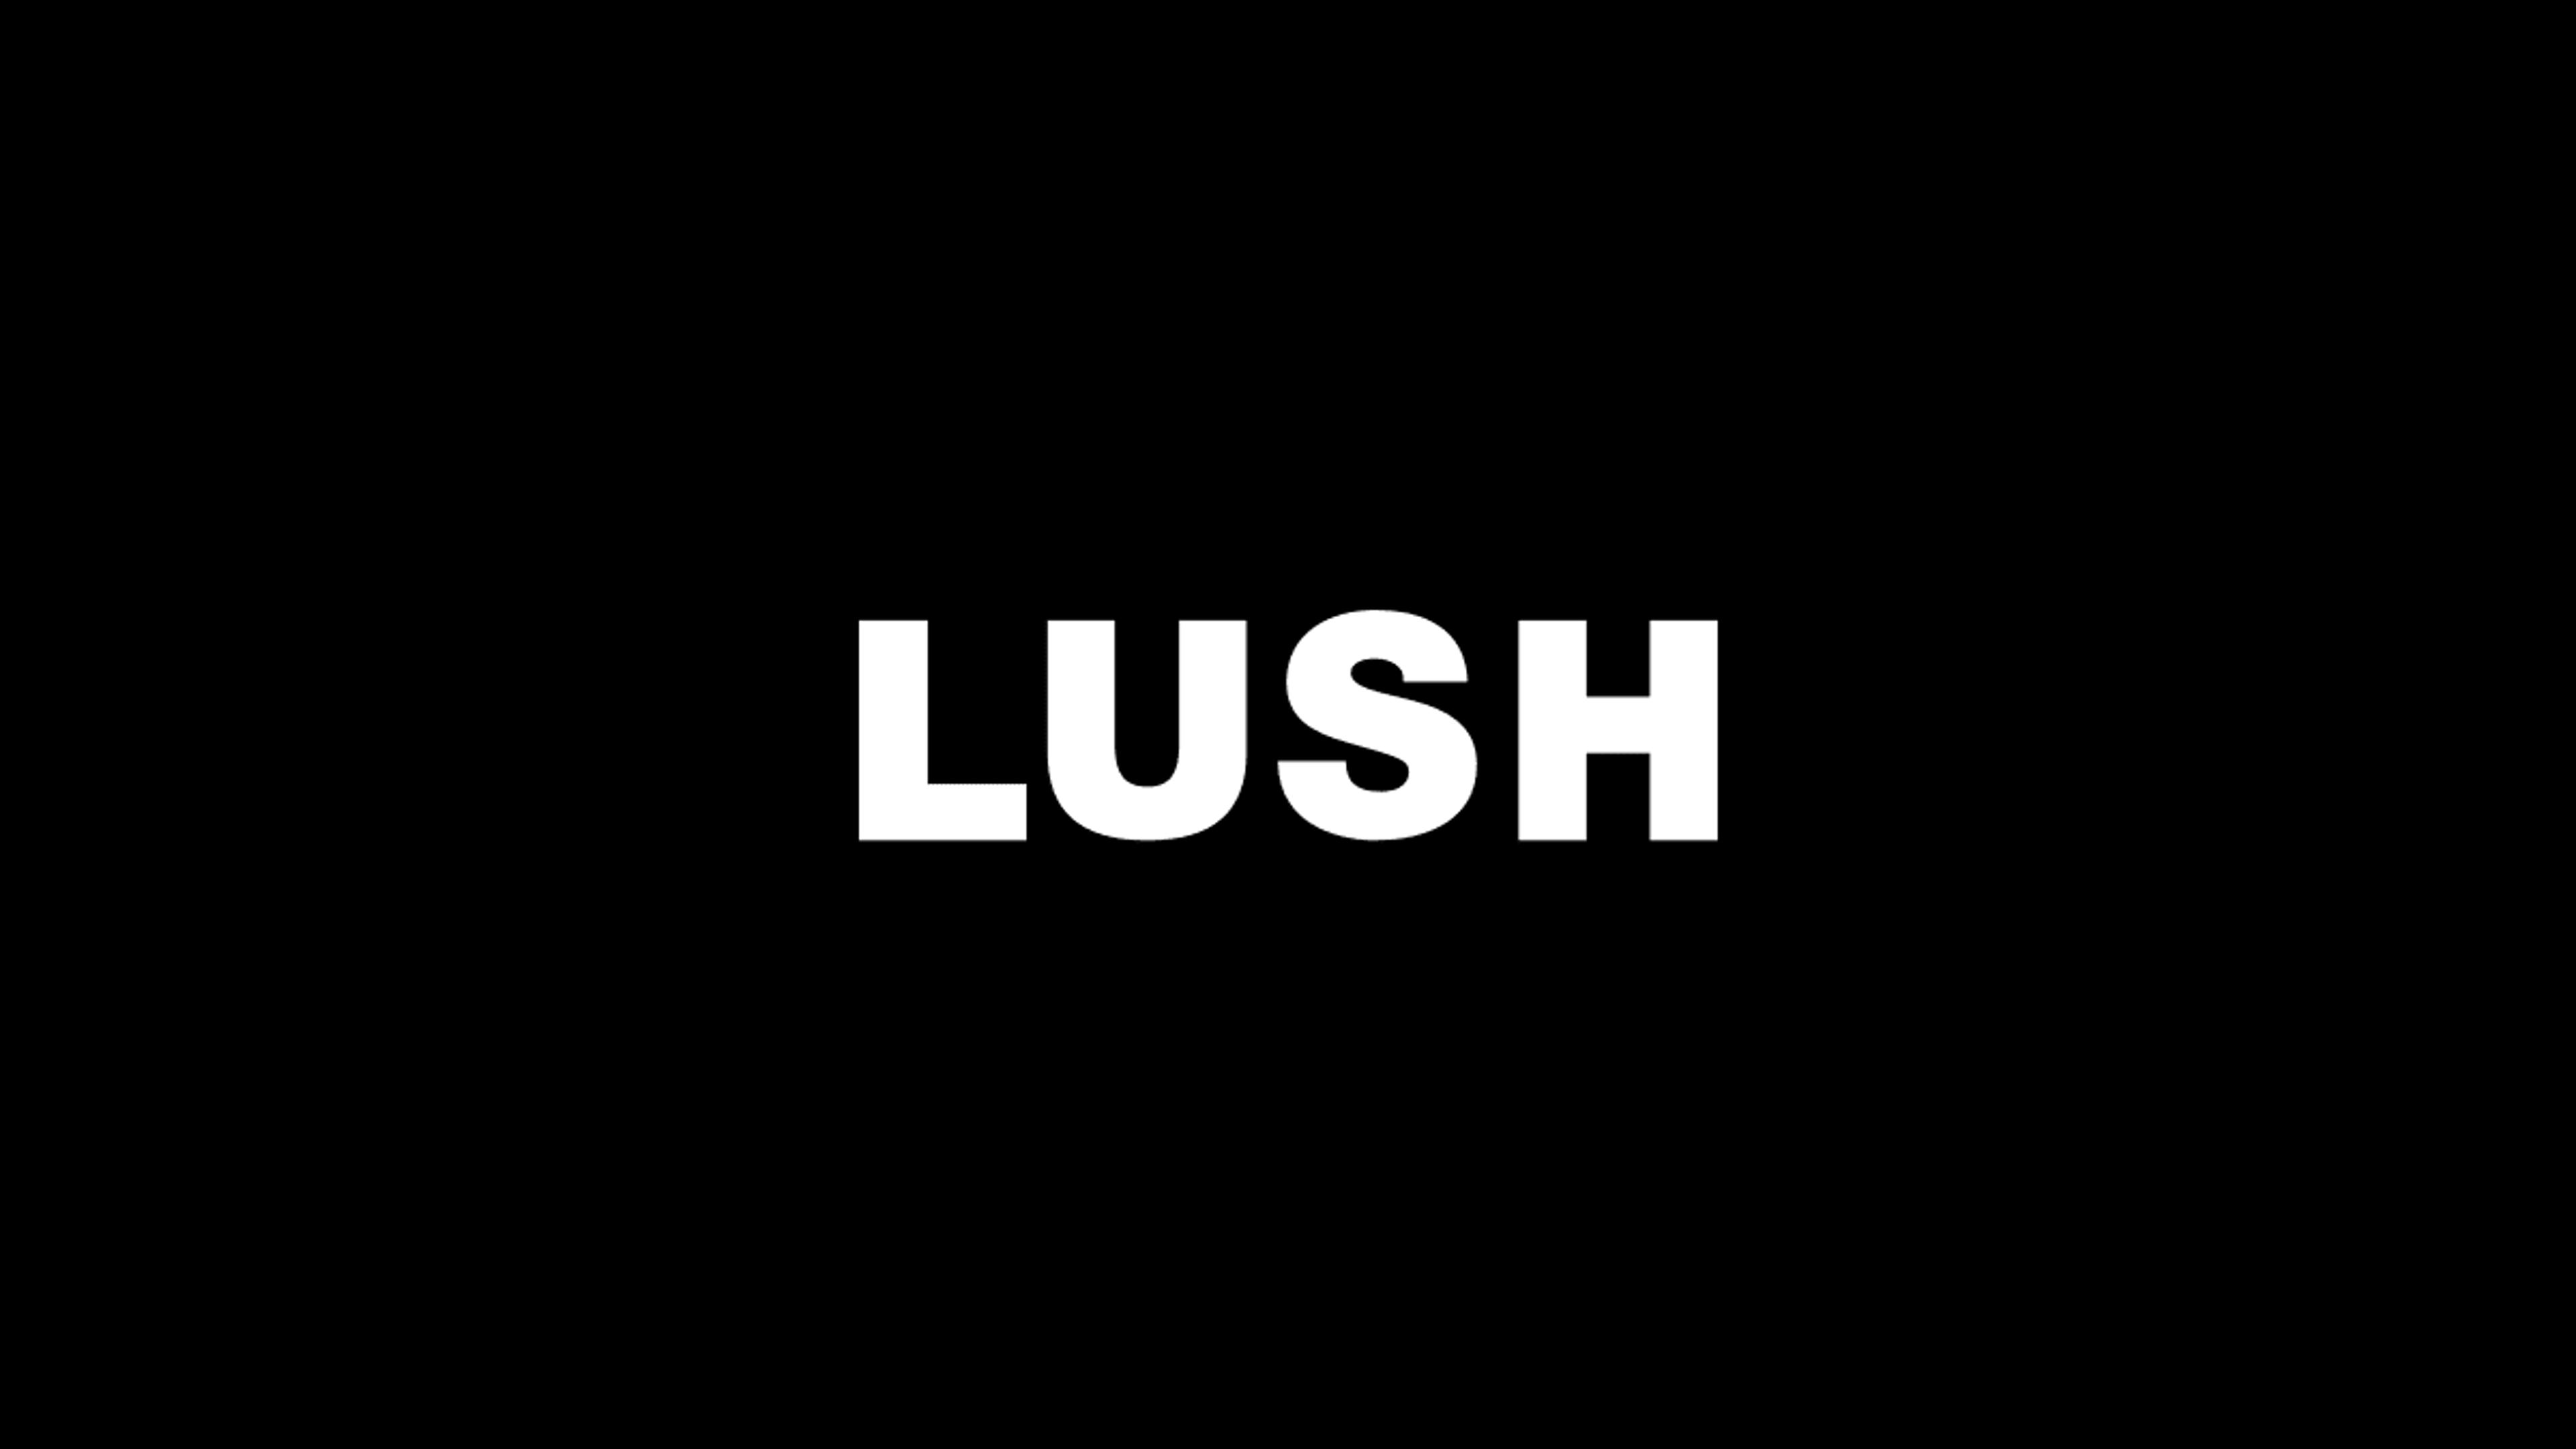 lush.com/us/en_us/p/scrubee-body-butter